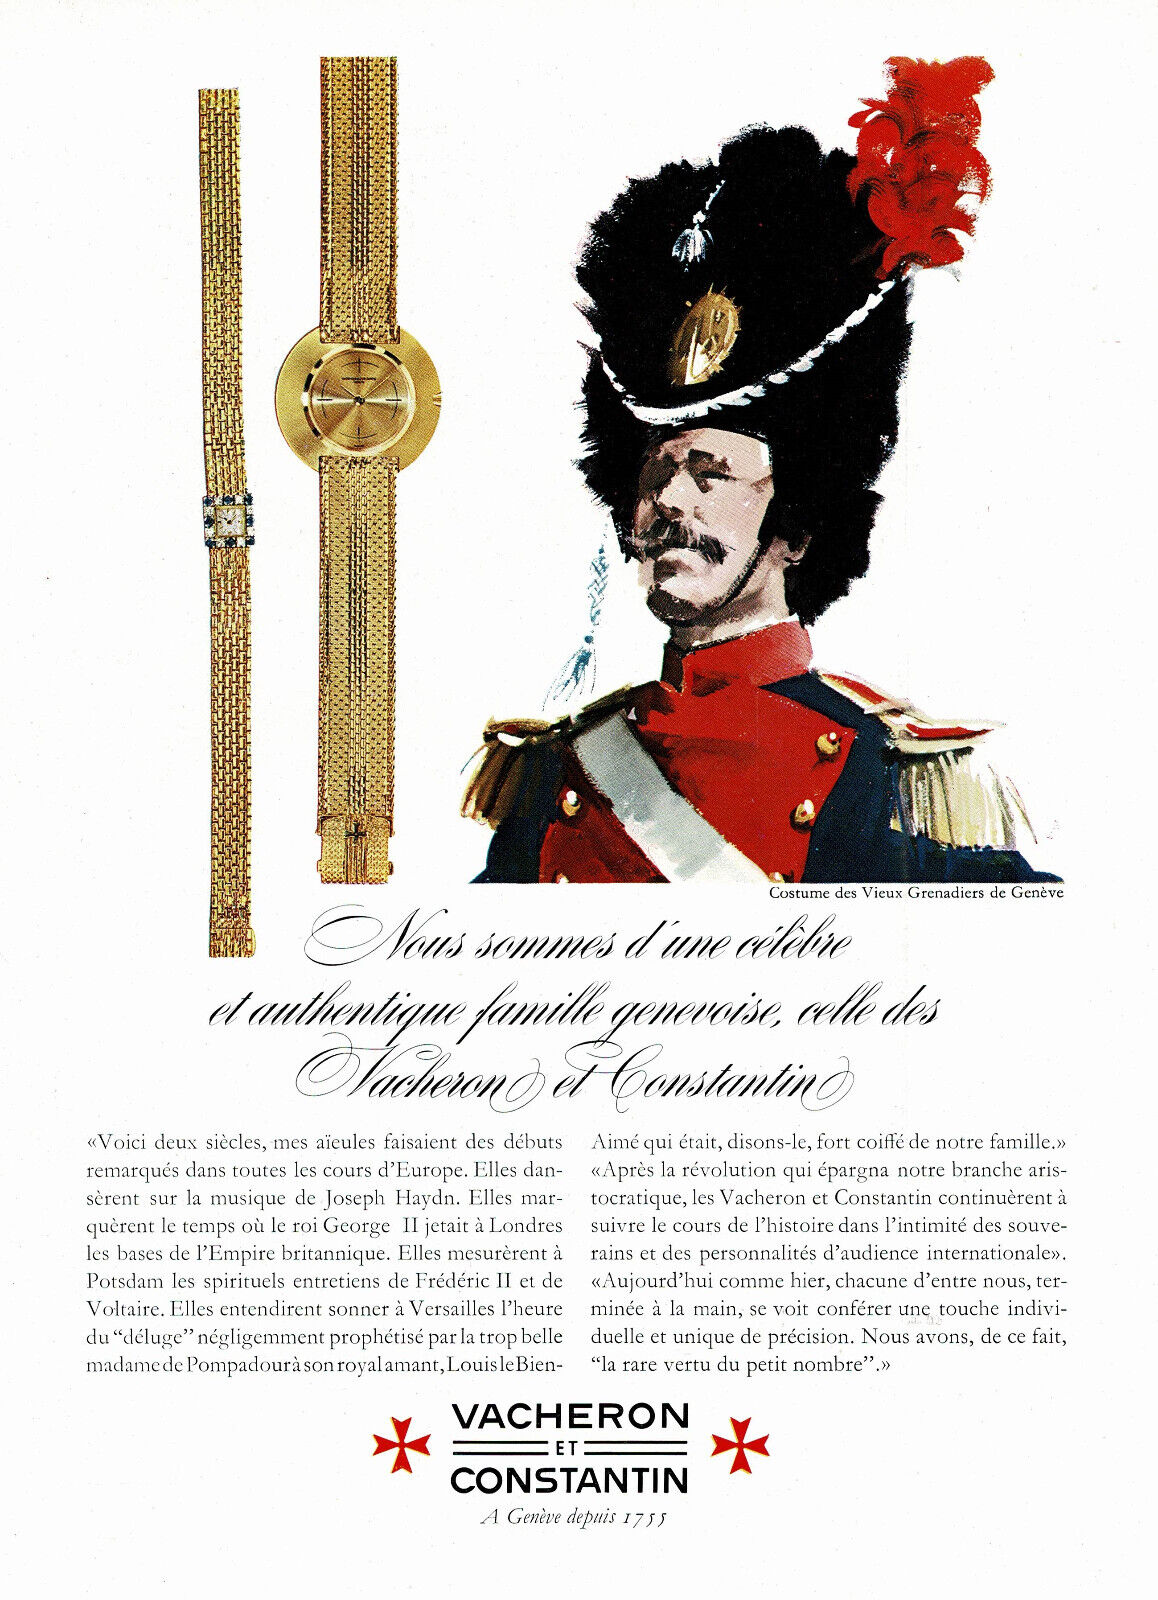 Original Vintage Vacheron Constantin Watch MCM Art Print Ad 1960s b